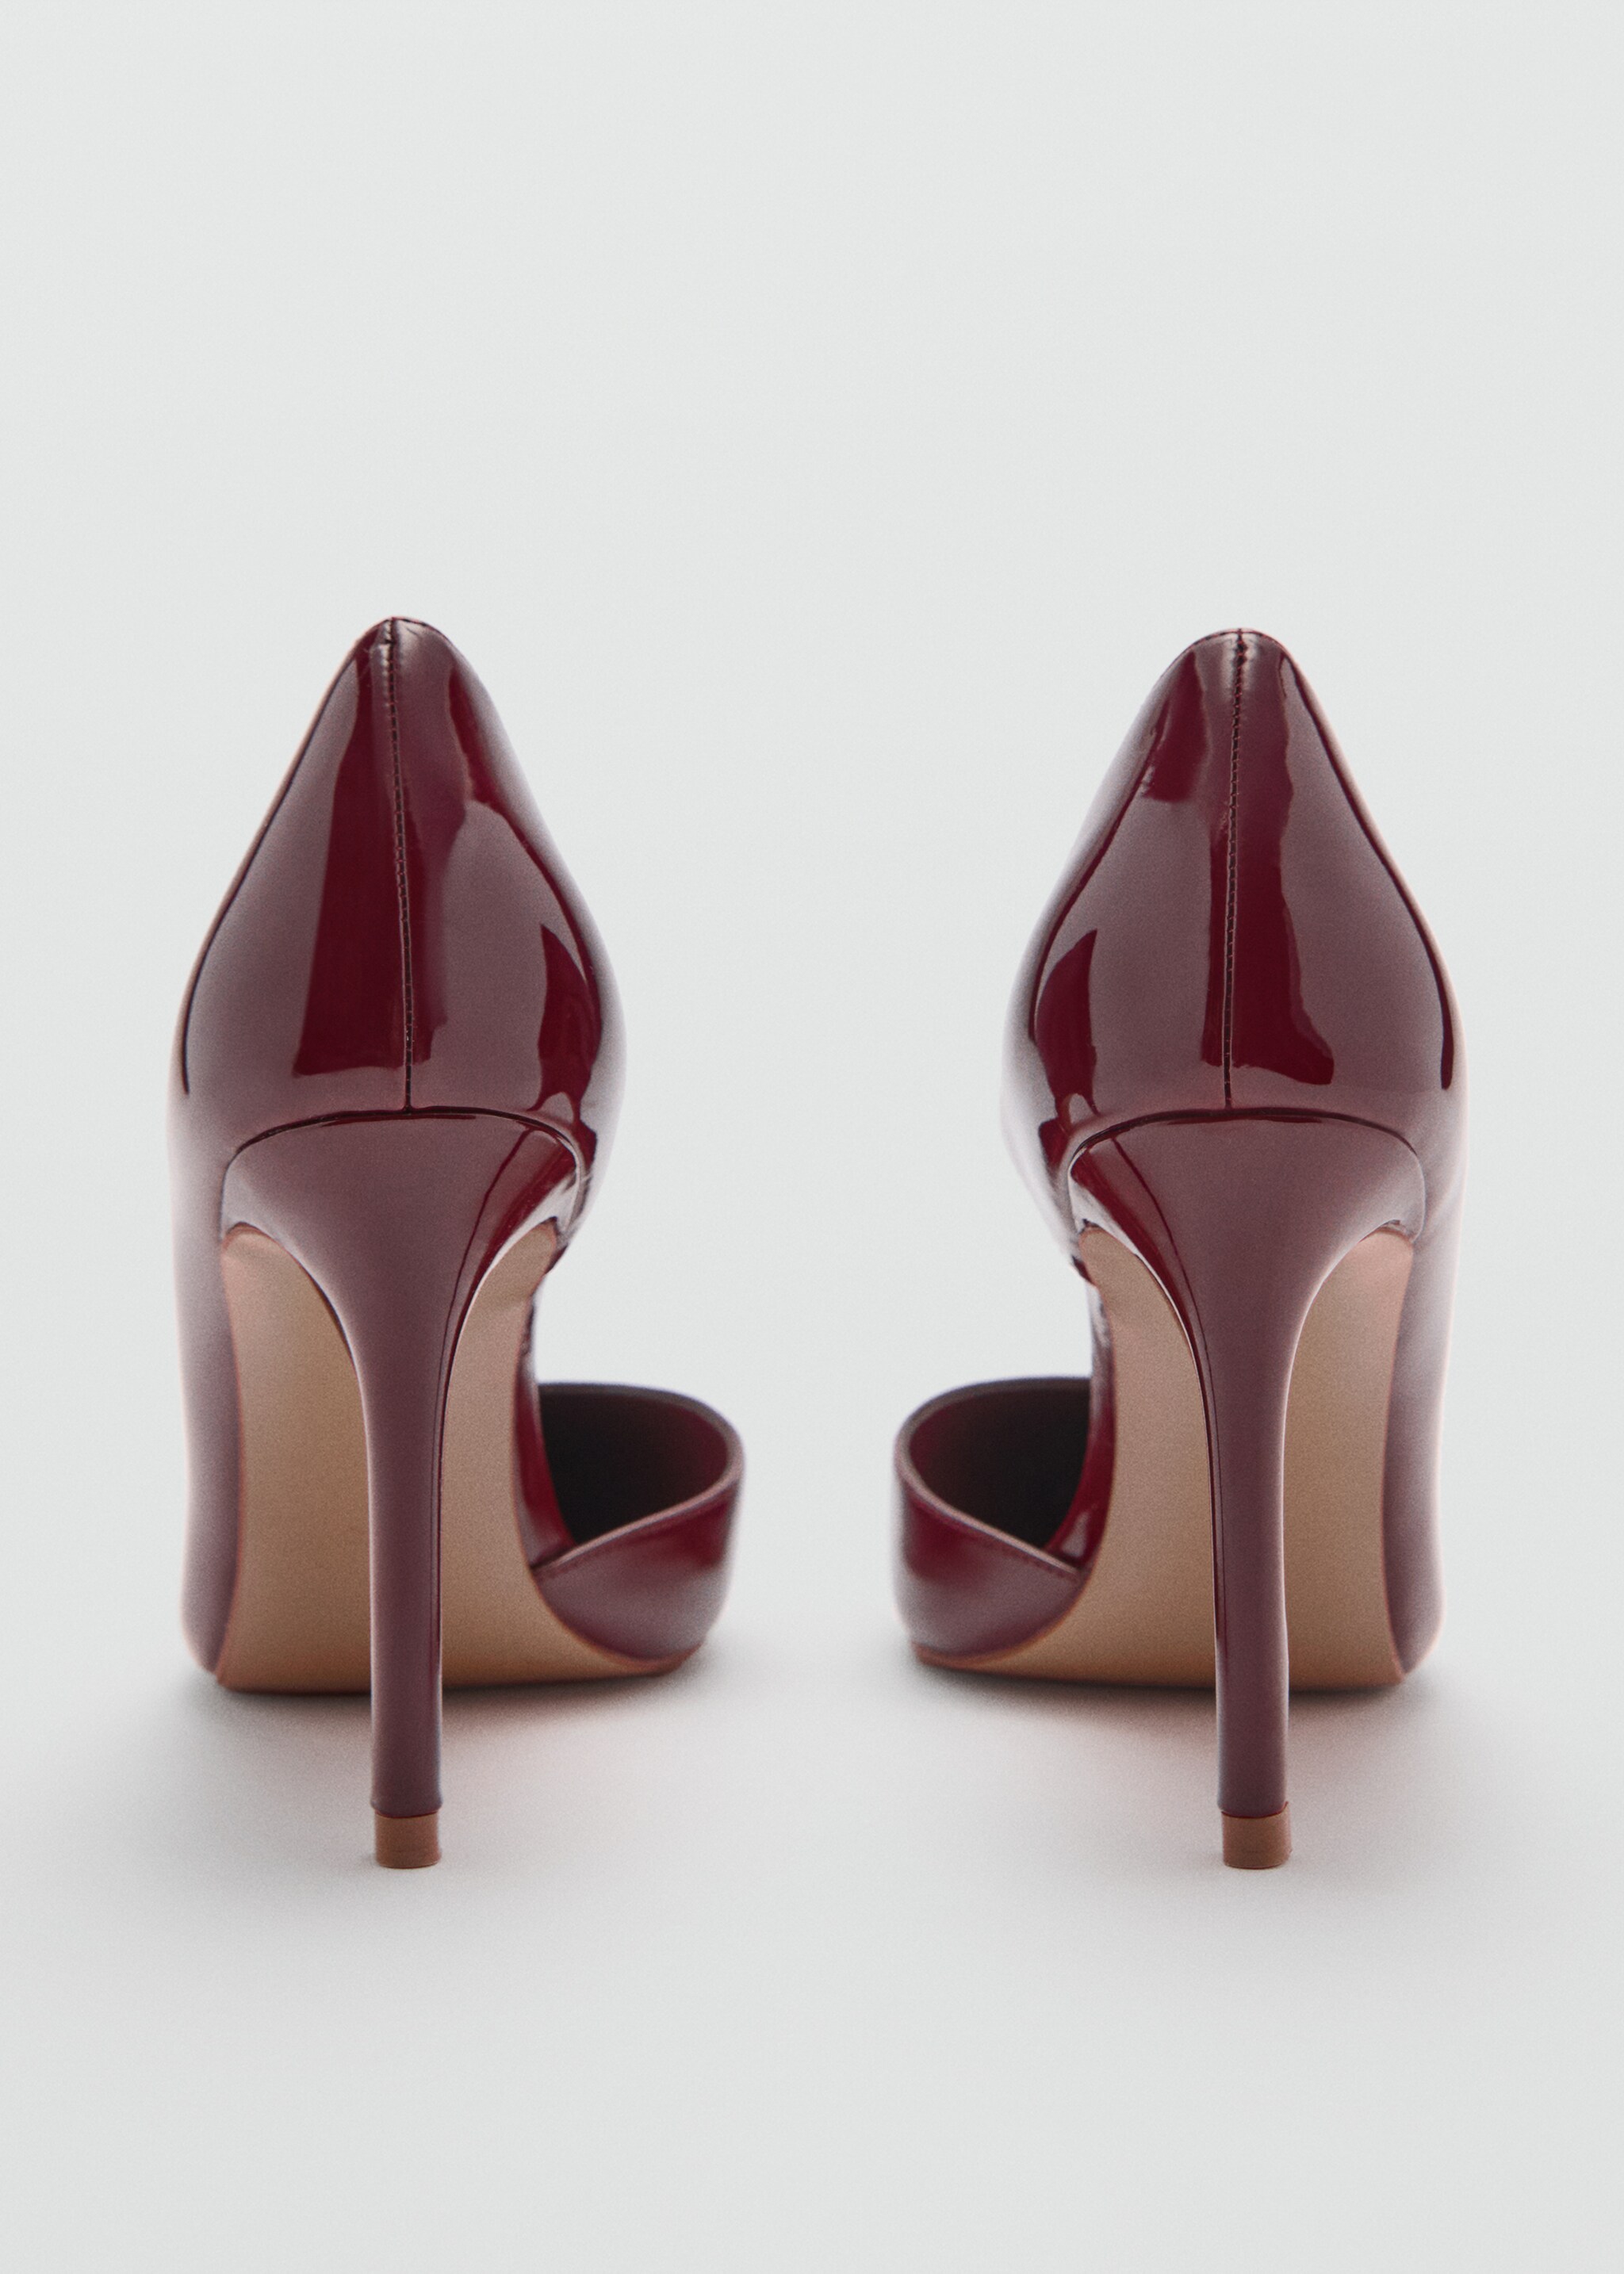 Asymmetrical heeled shoes - Детальніше про товар 1